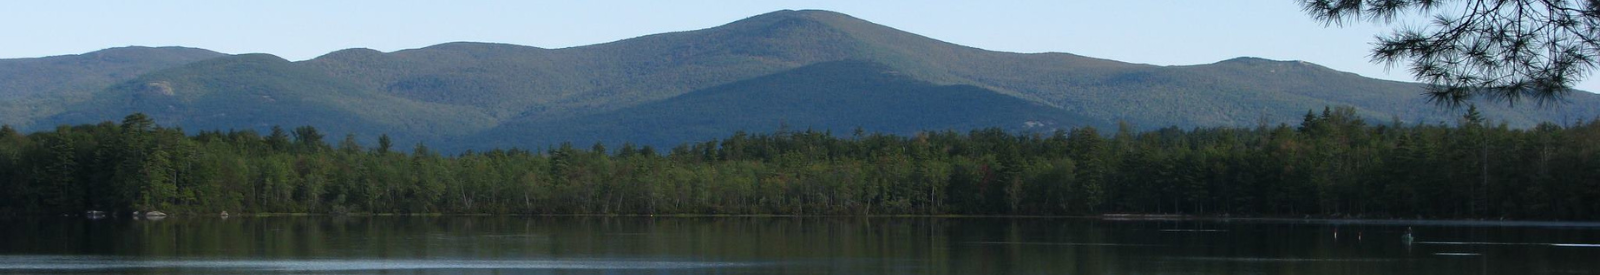 Mirror Lake, NH mountain view